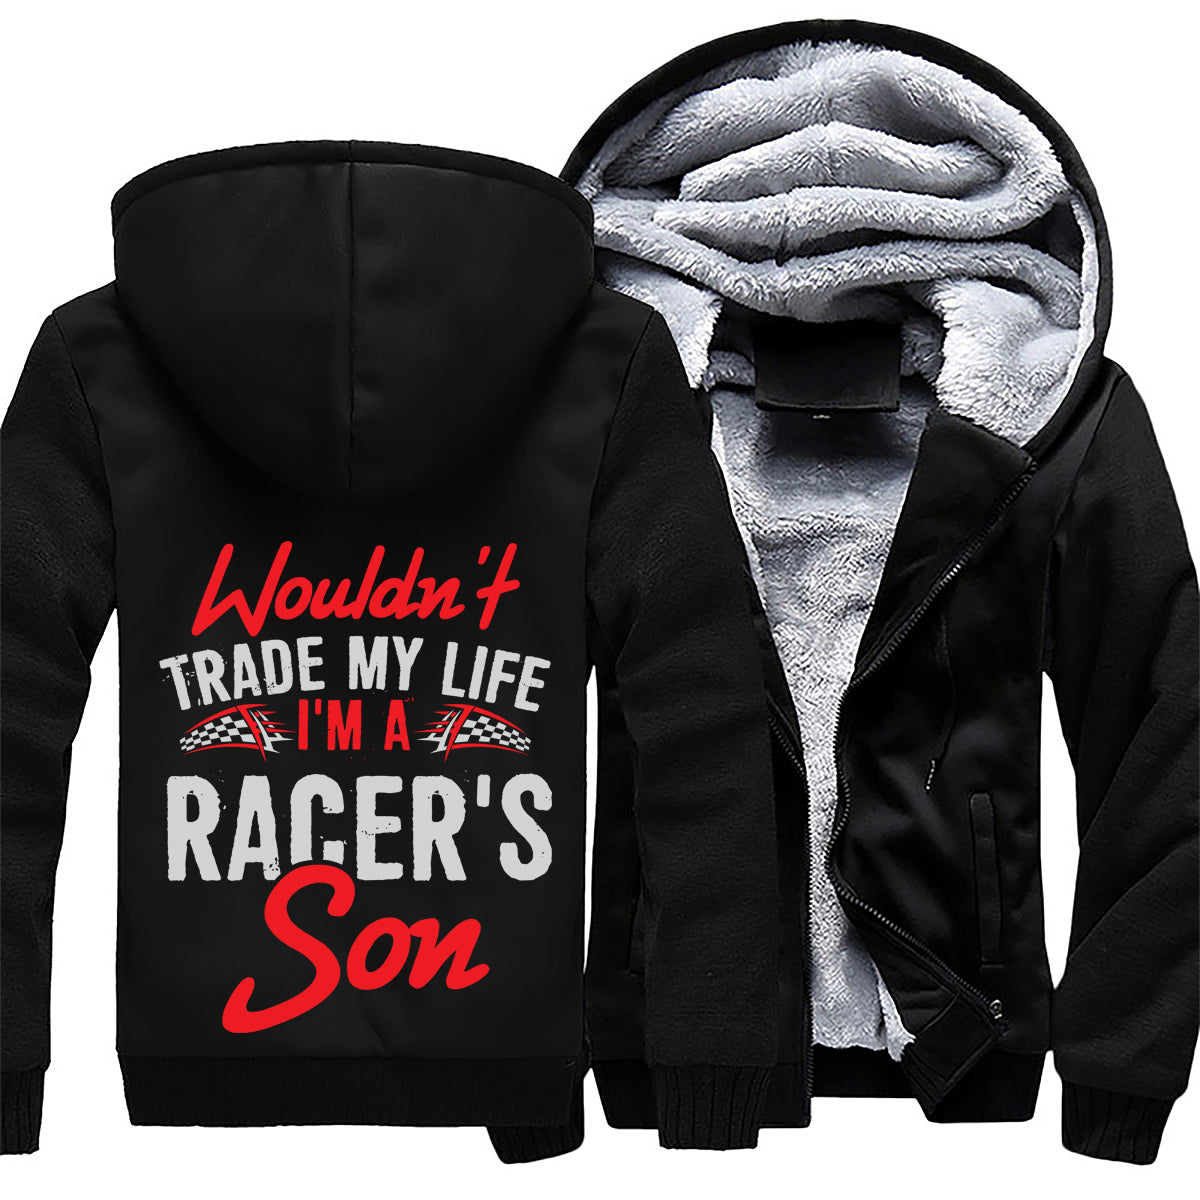 I'm A Racer's Son Jacket 